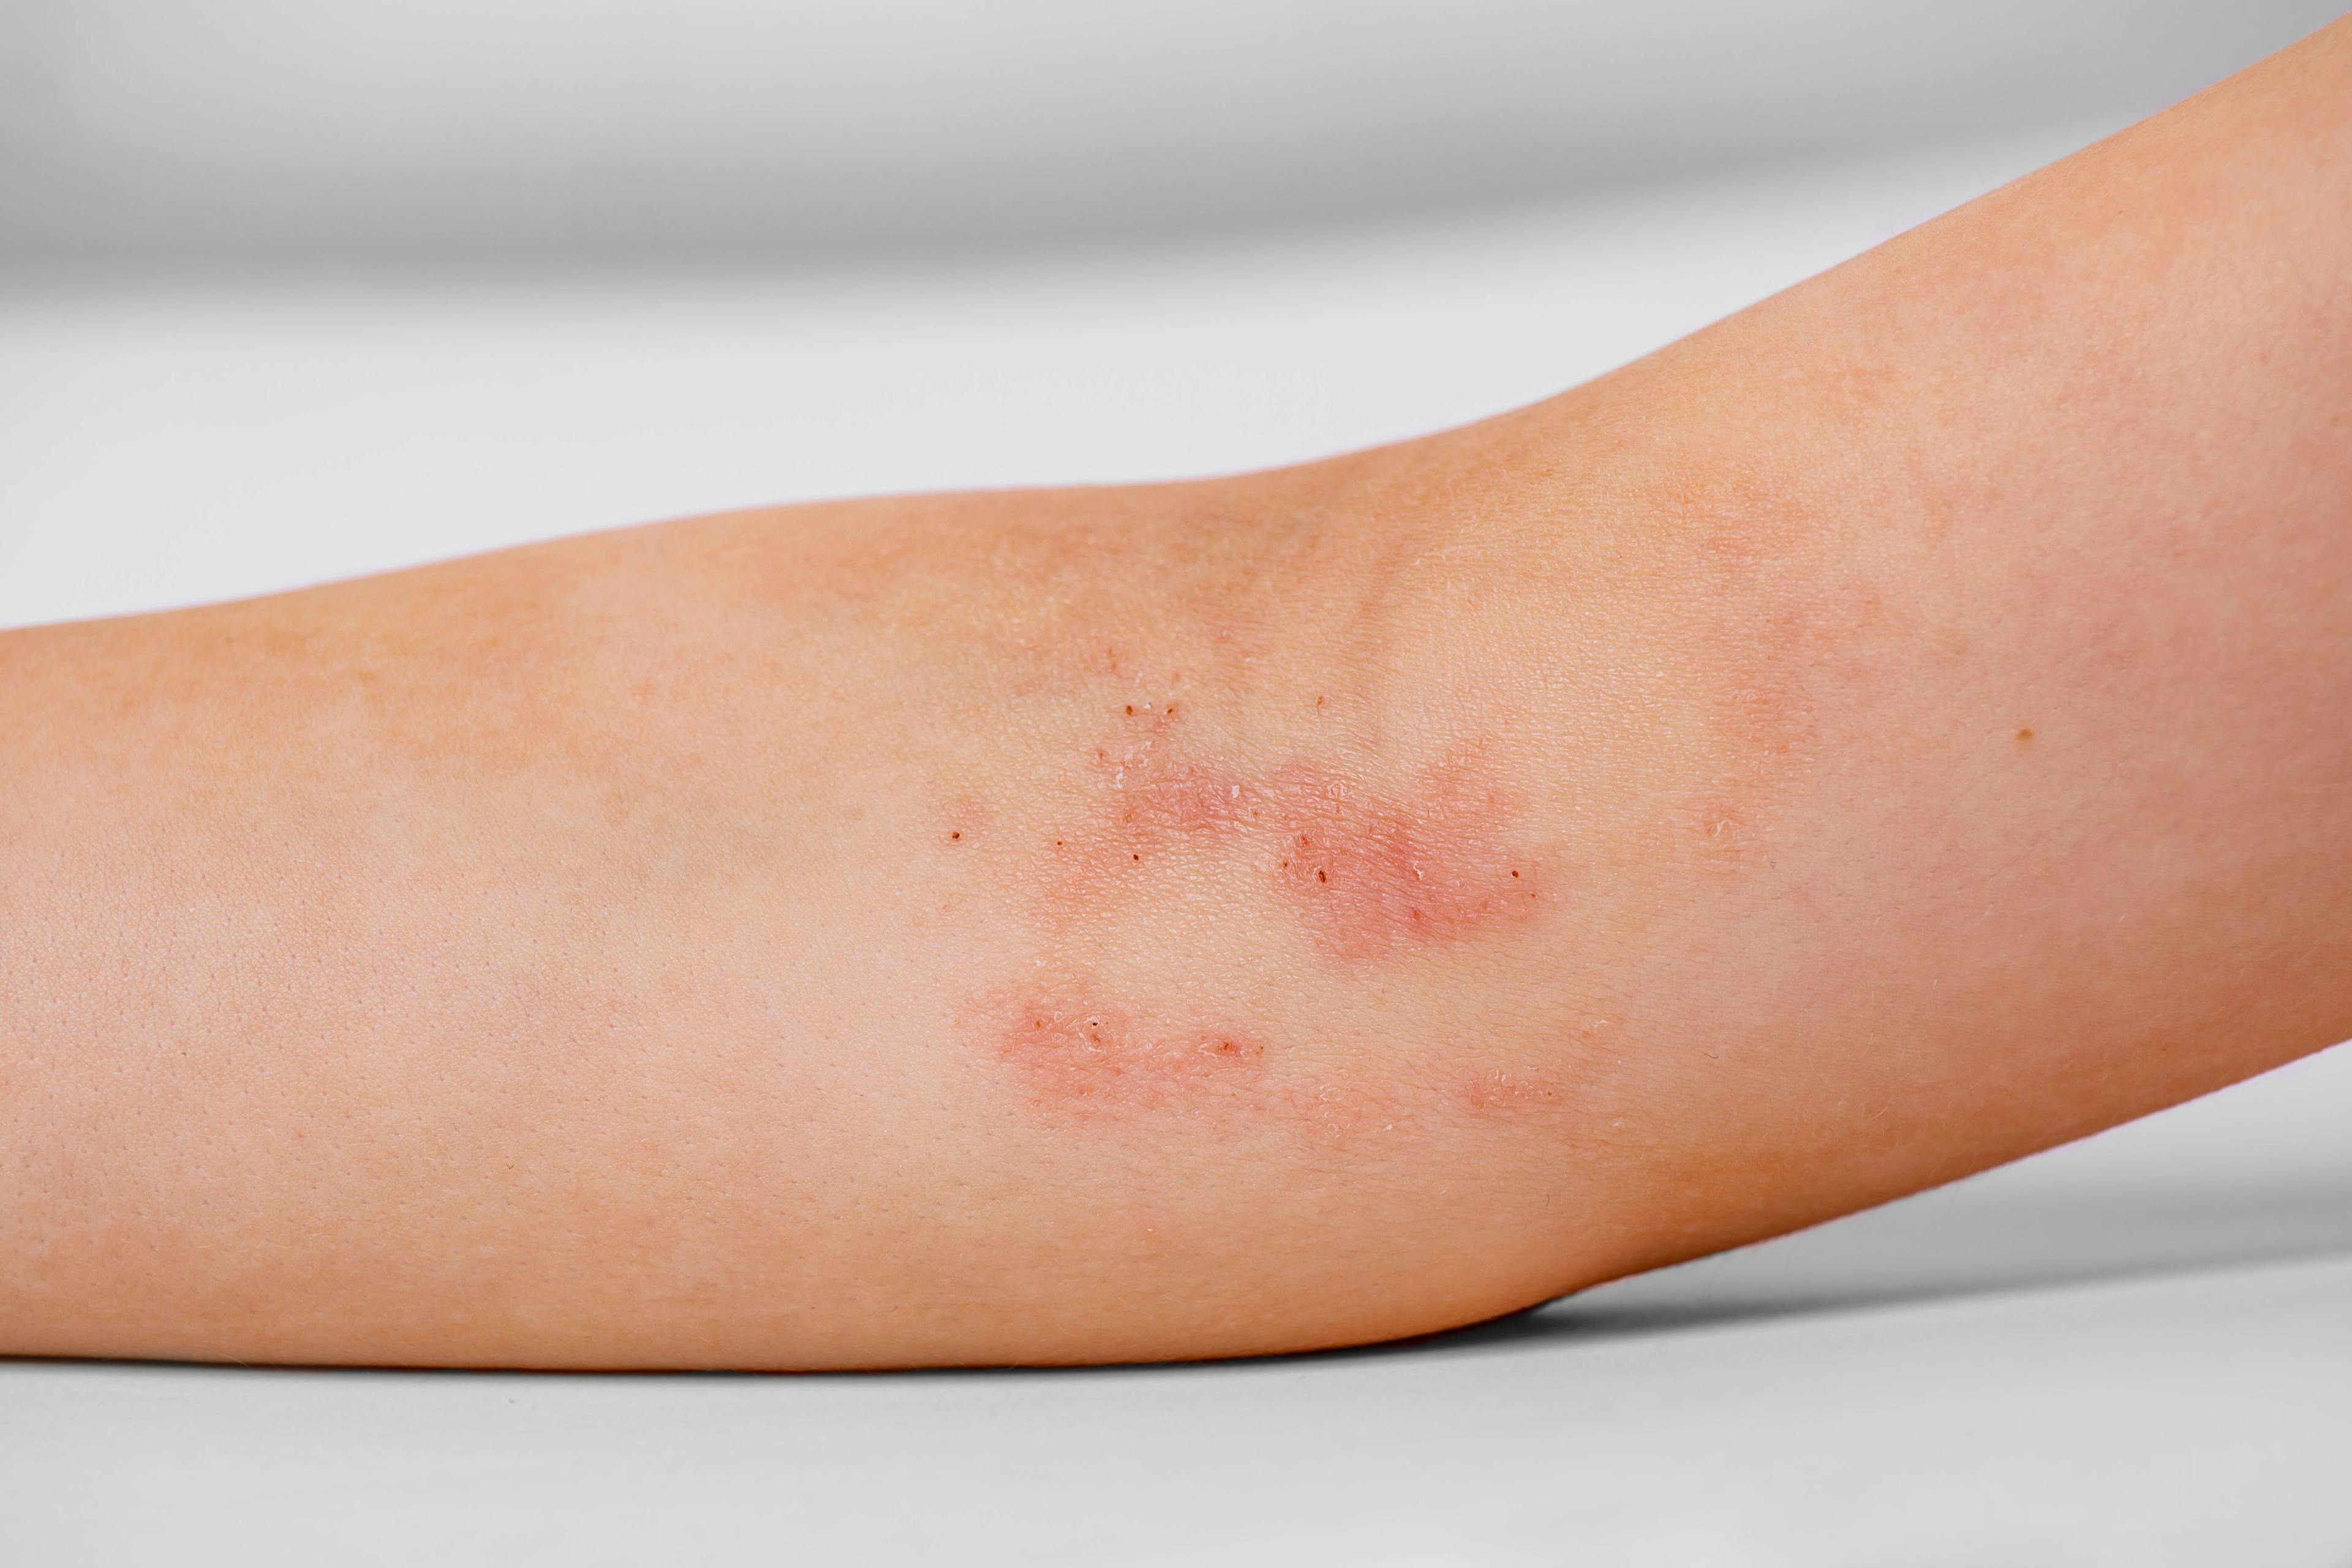 Atopic Dermatitis on Child's Arm | image credit: arhat - stock.adobe.com